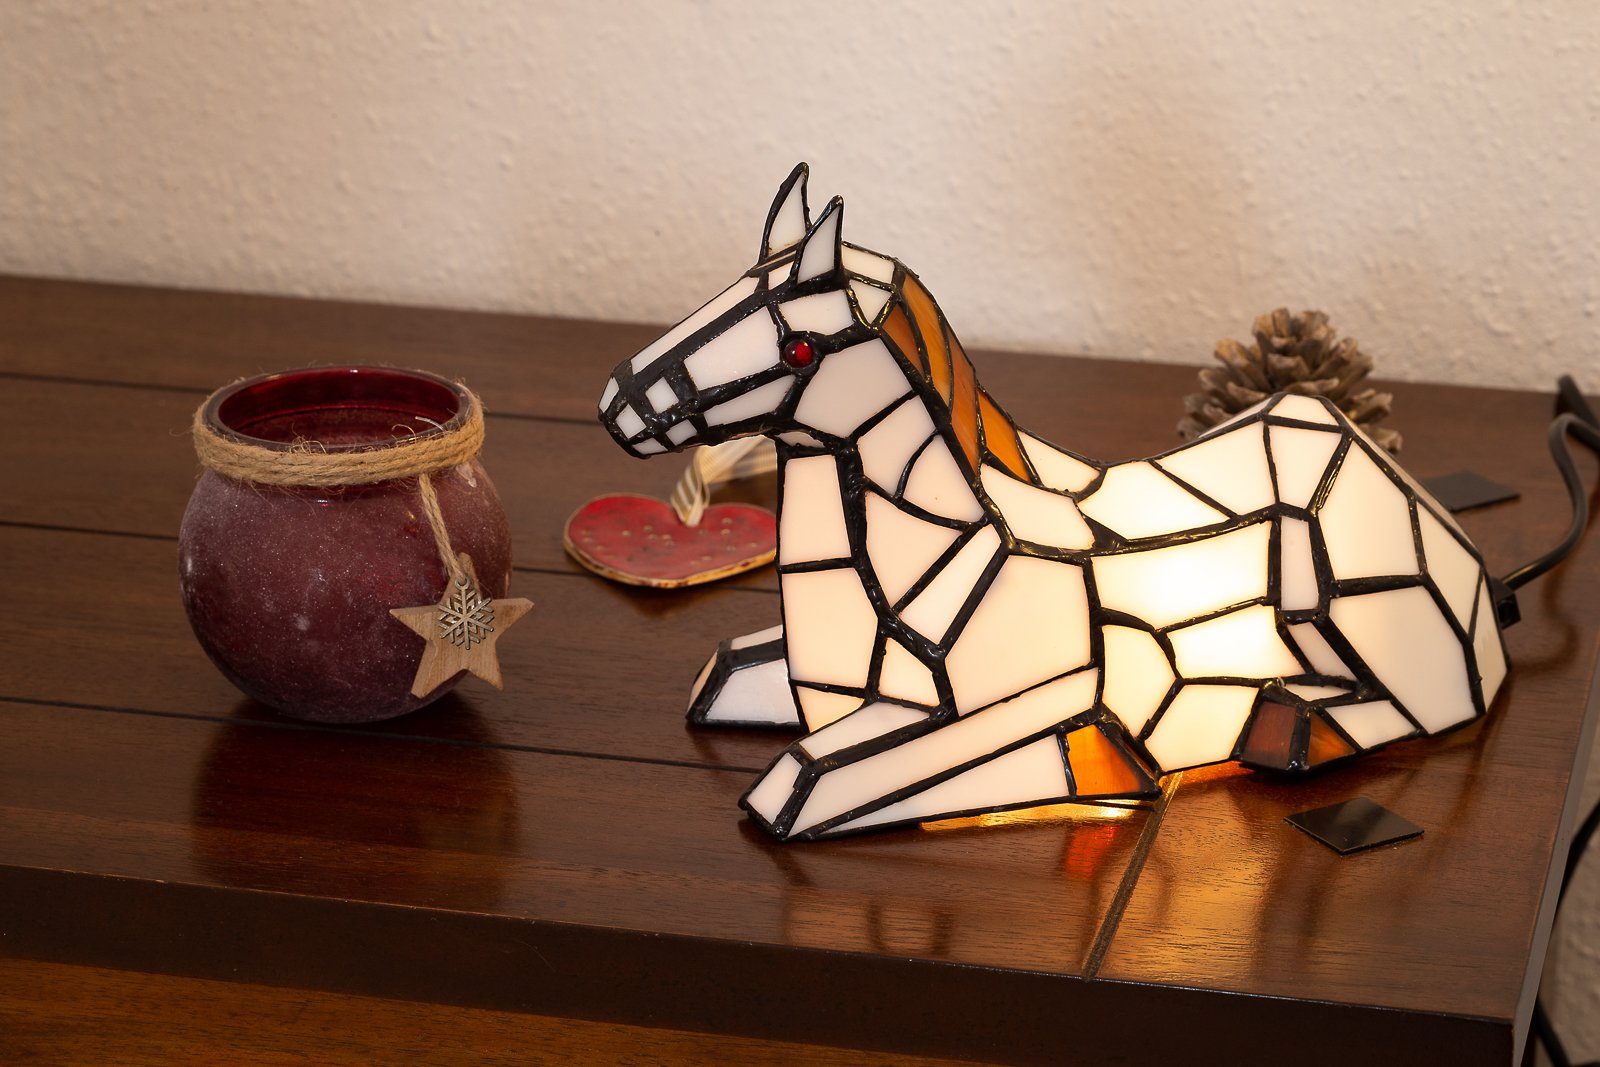 Pferd BIRENDY Stehlampe Birendy Dekorationslampe Style Tif163 Tiffany Lampe Tischlampe